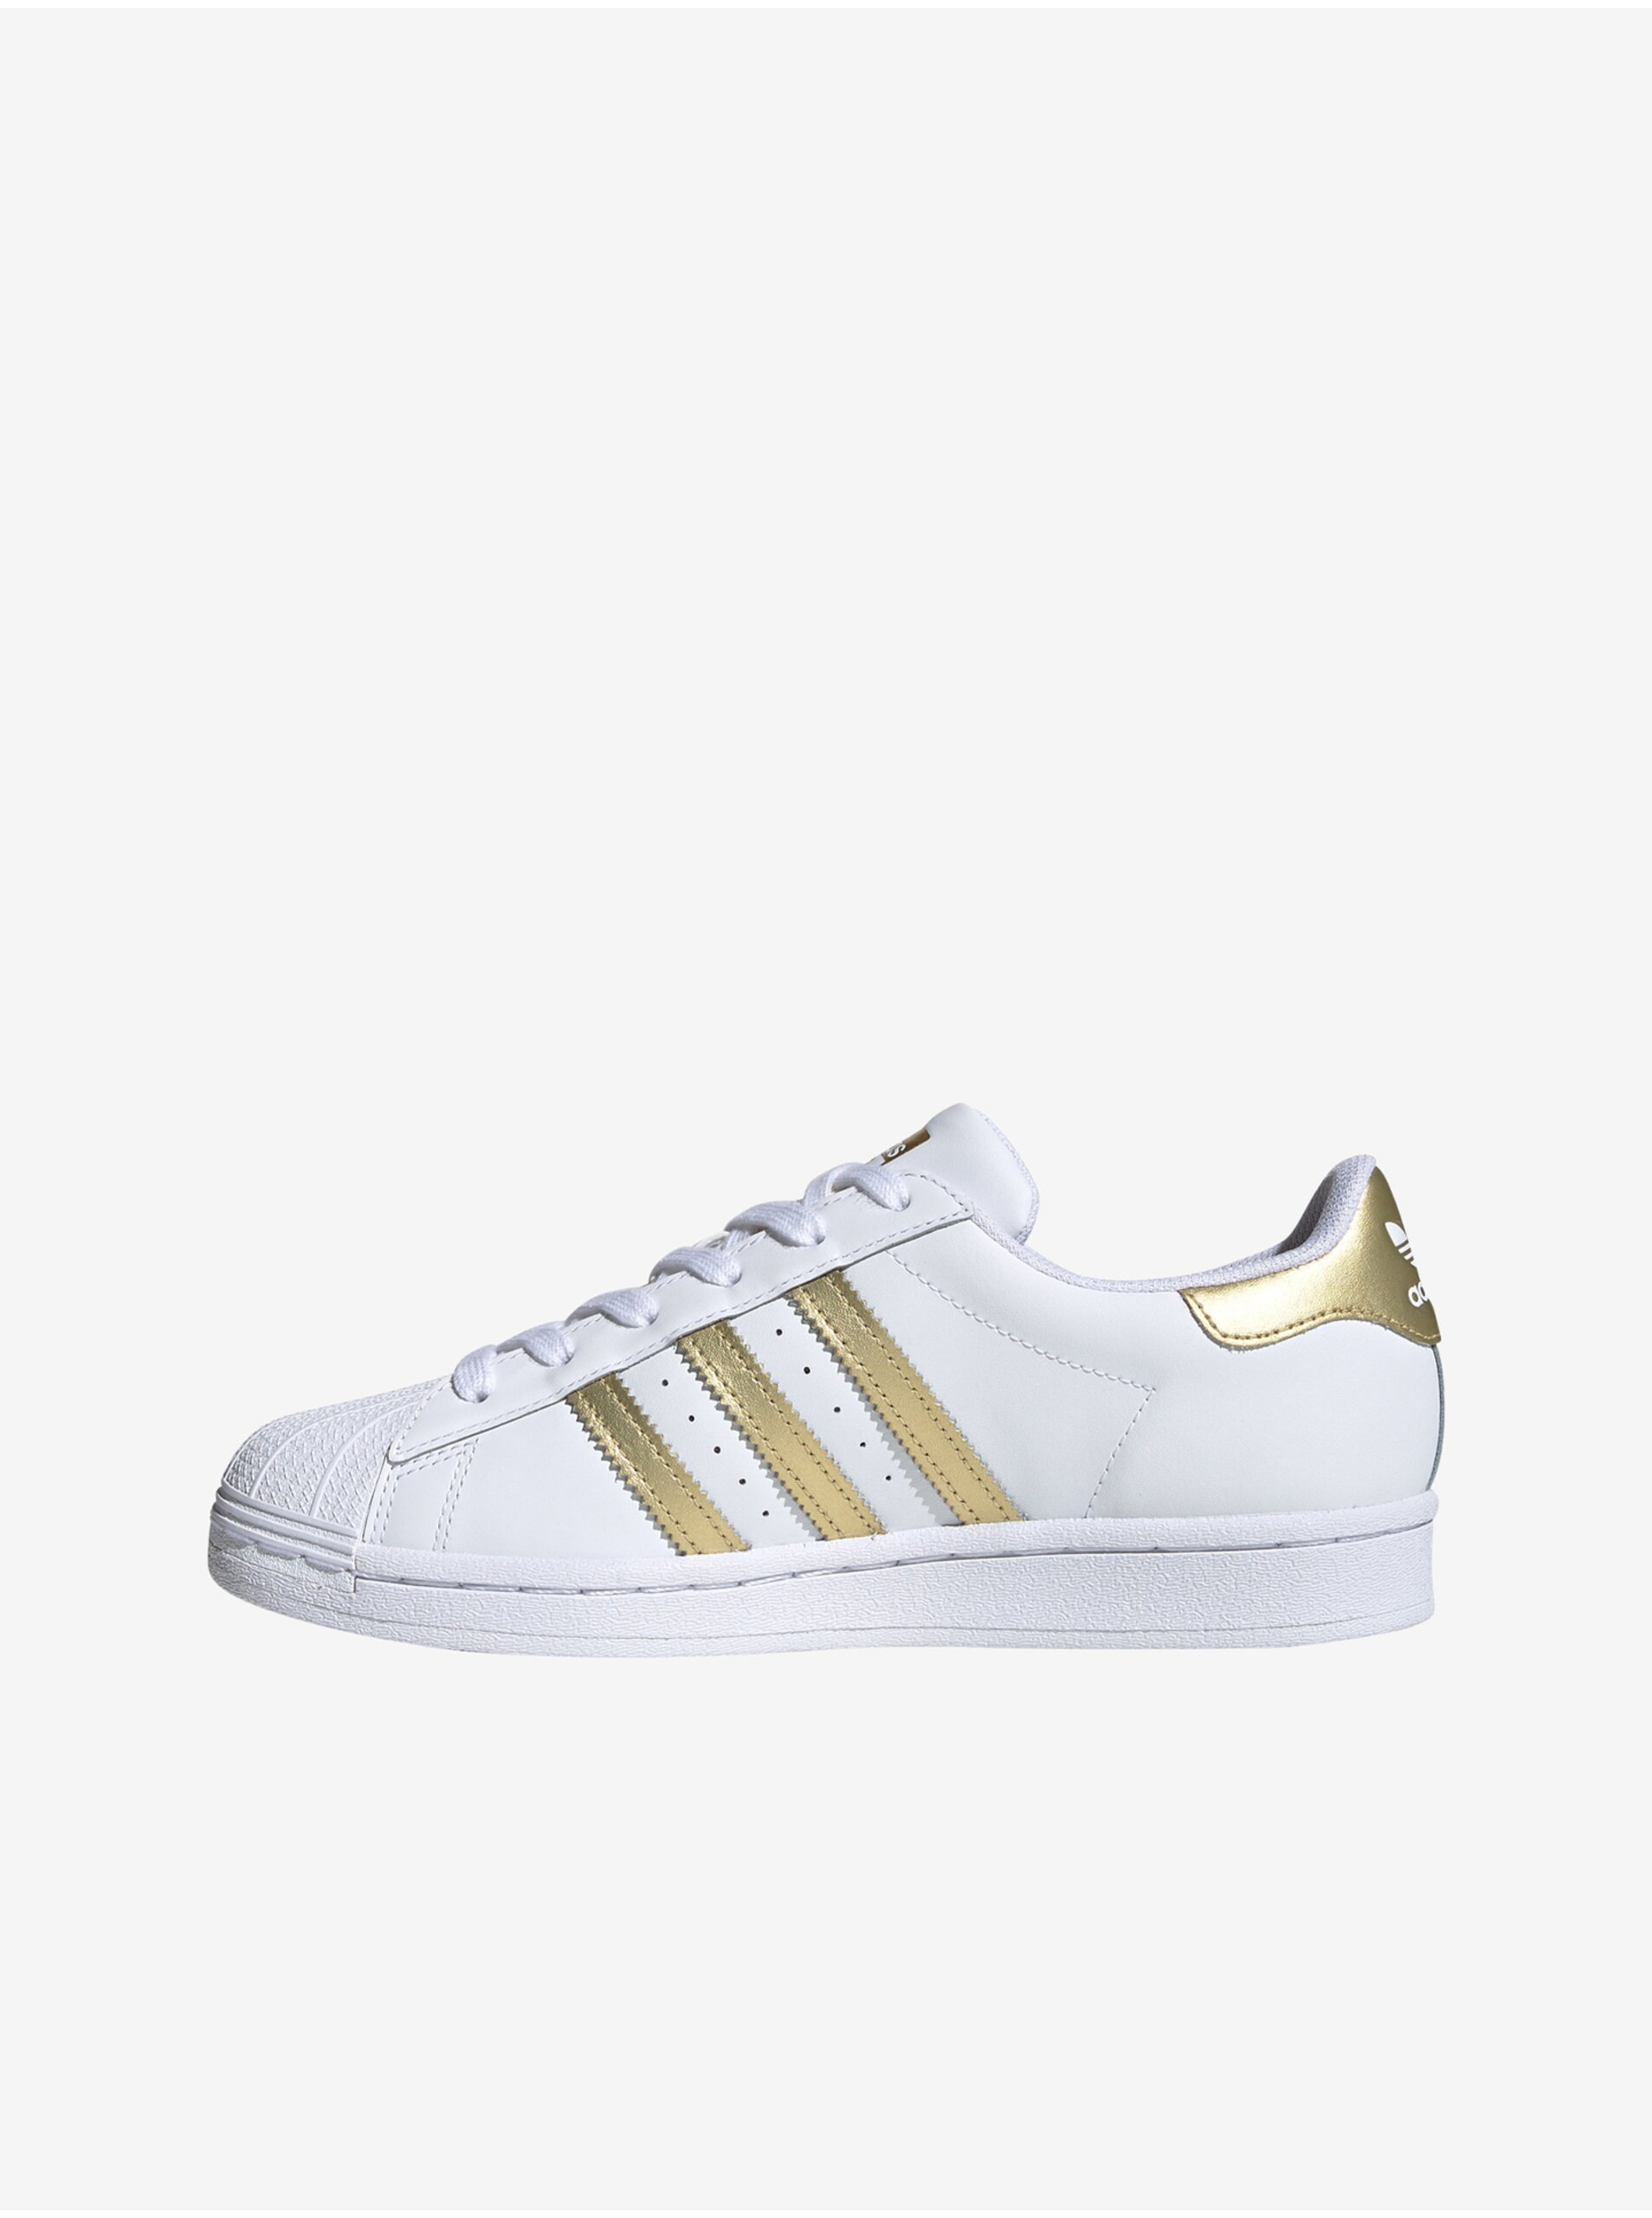 E-shop Zlato-biele dámske kožené tenisky adidas Originals Superstar